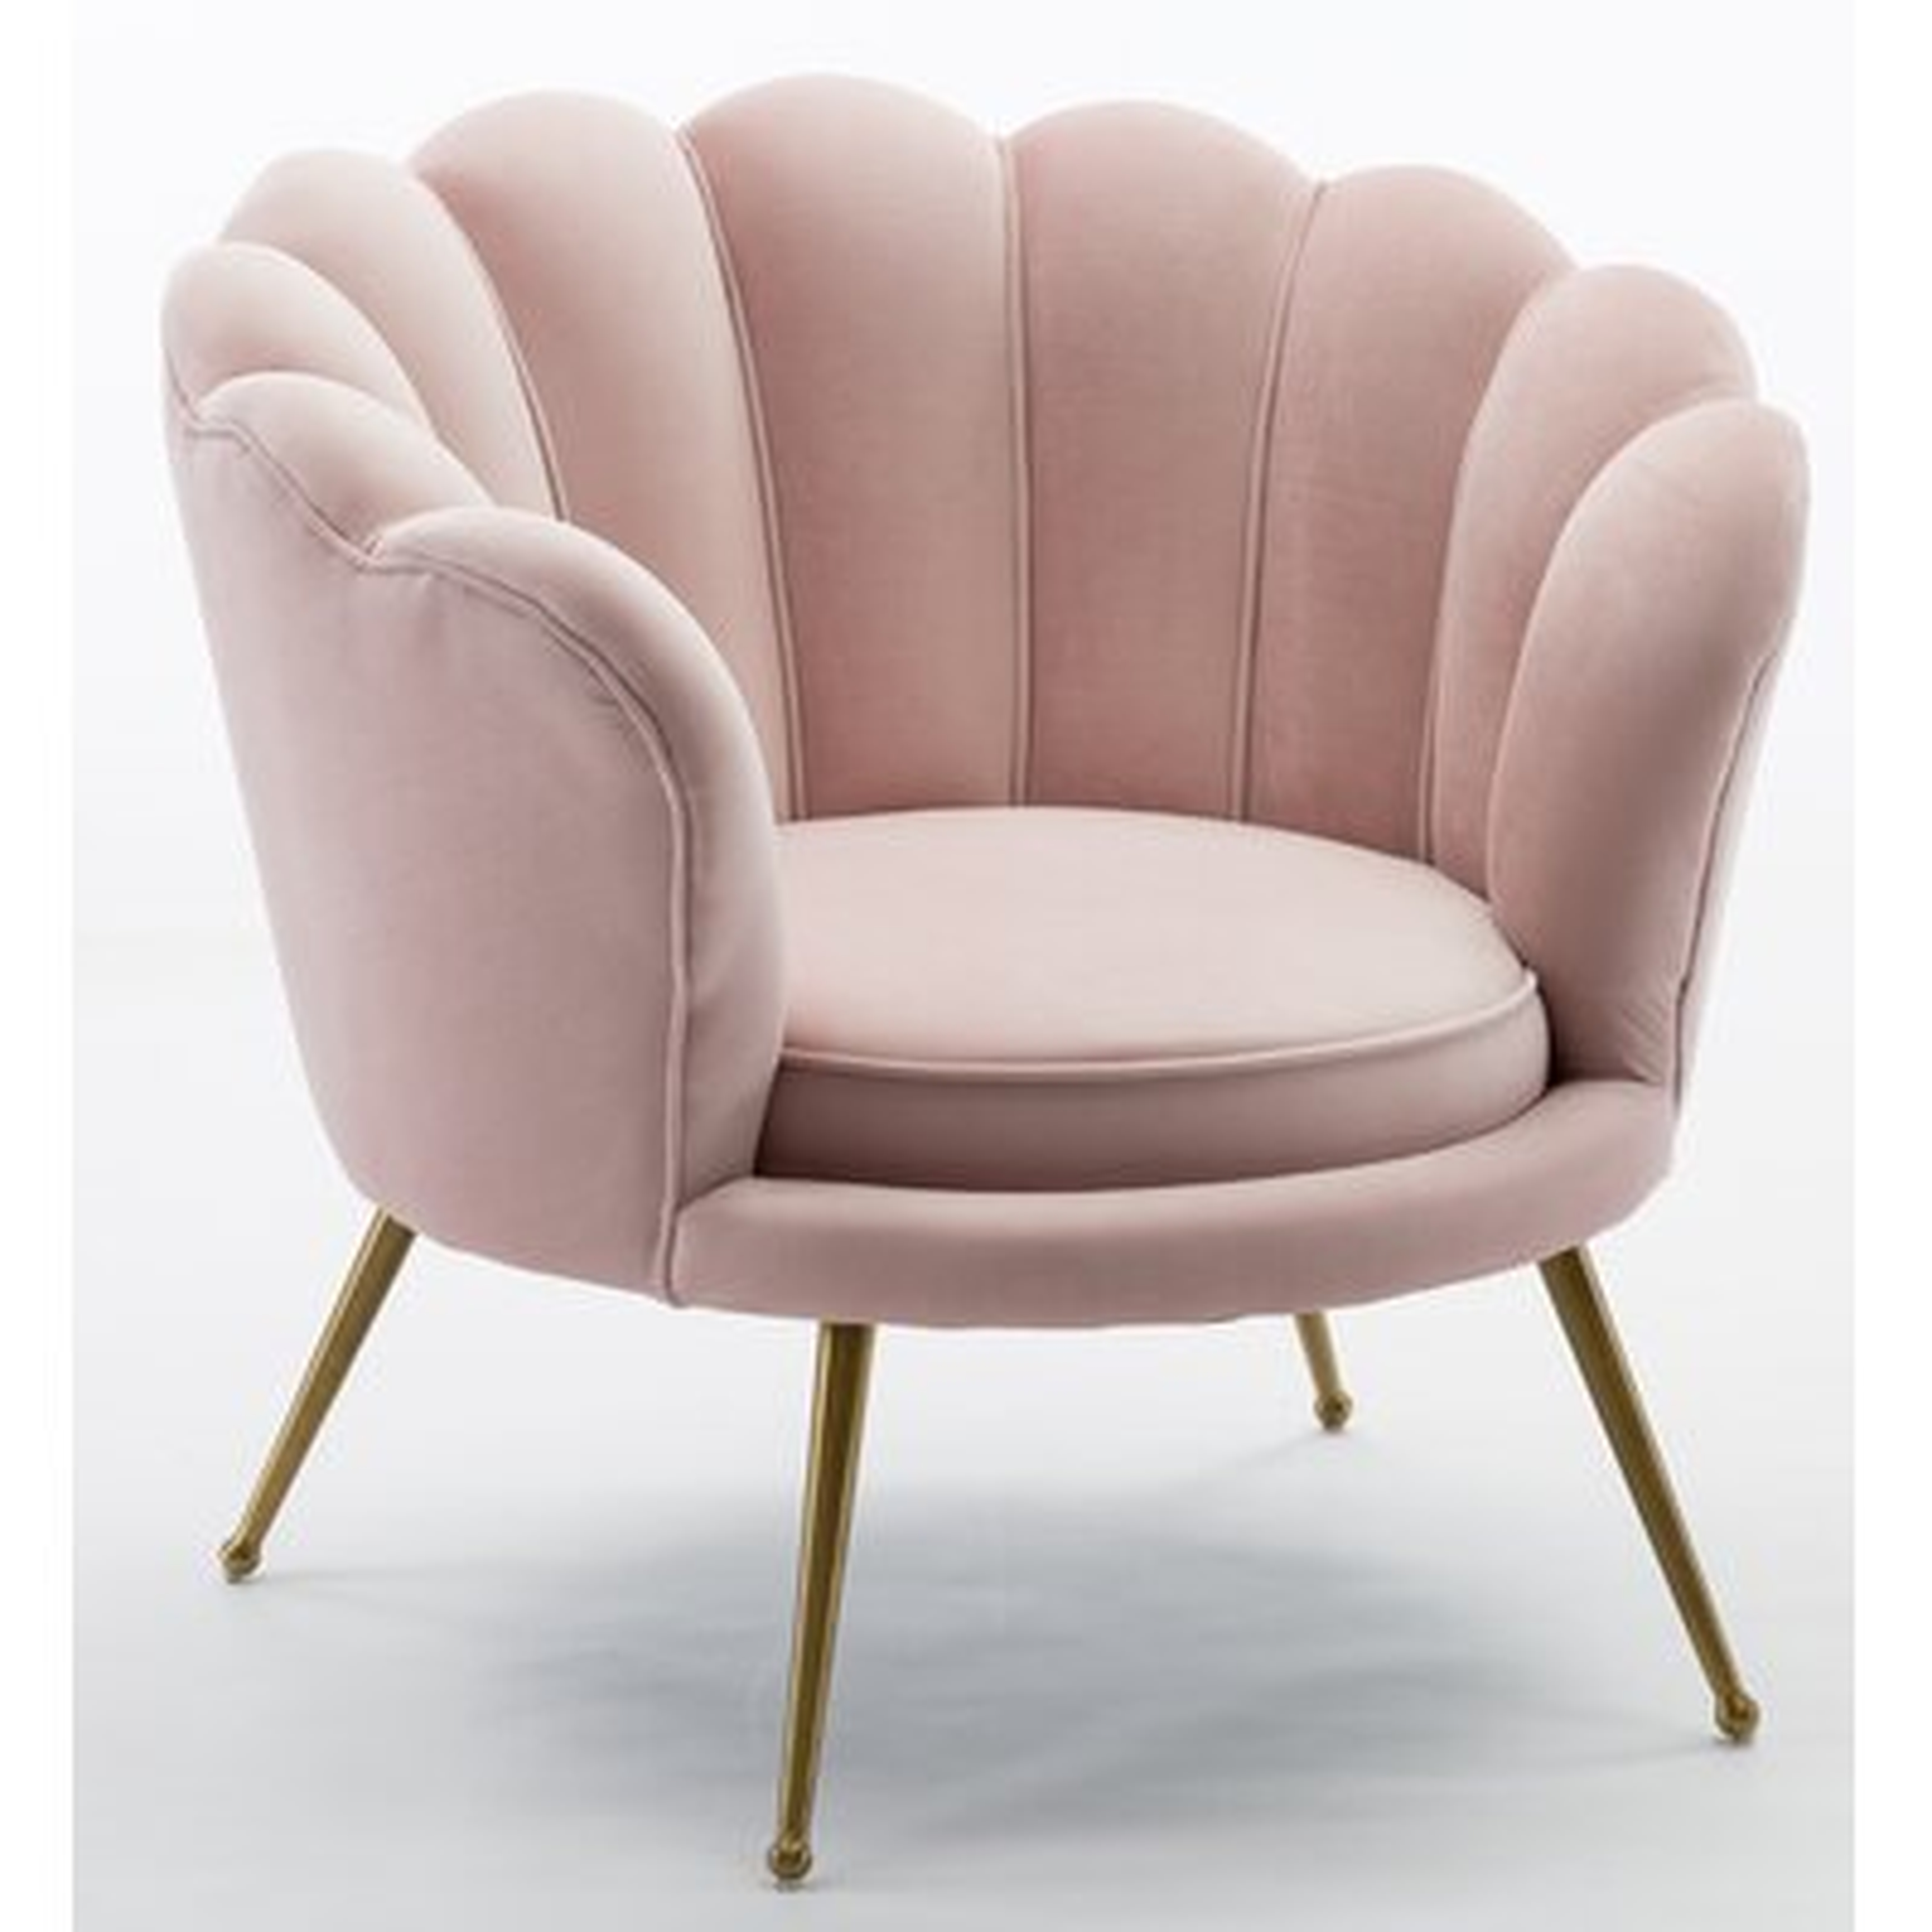 Gayla Barrel Chair - Wayfair